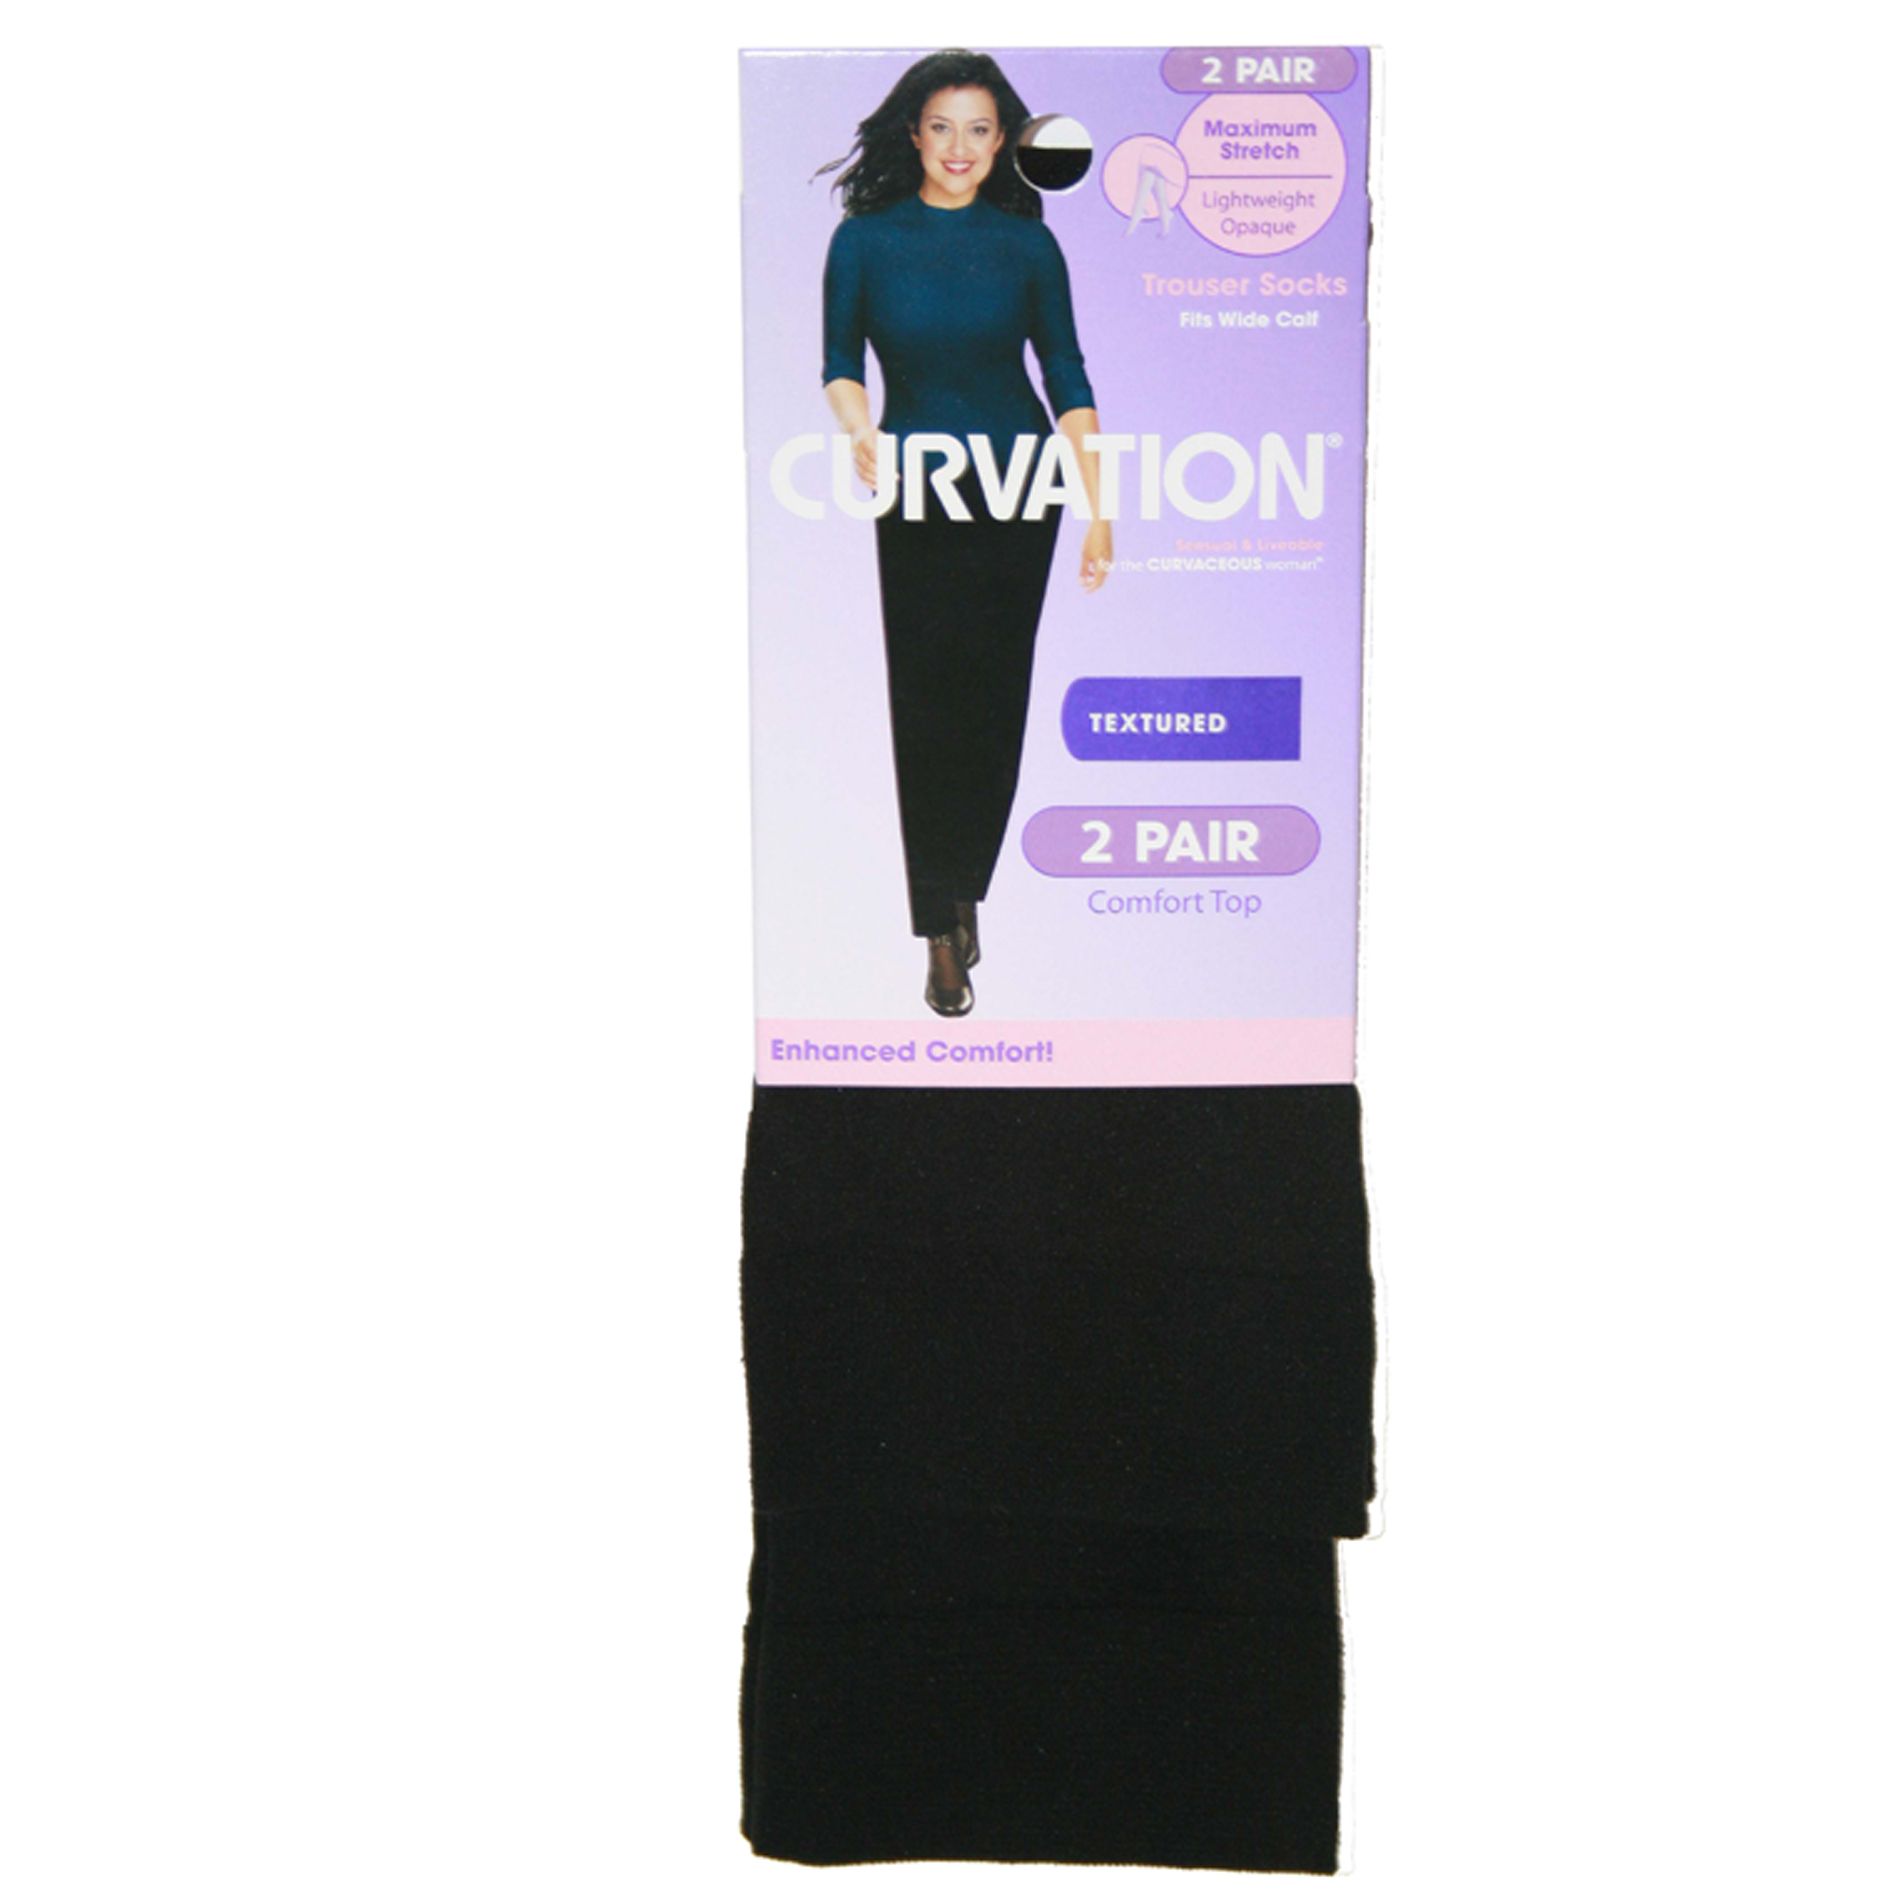 Curvation Women&#39;s Plus 2 Pair Stretch Trouser Socks